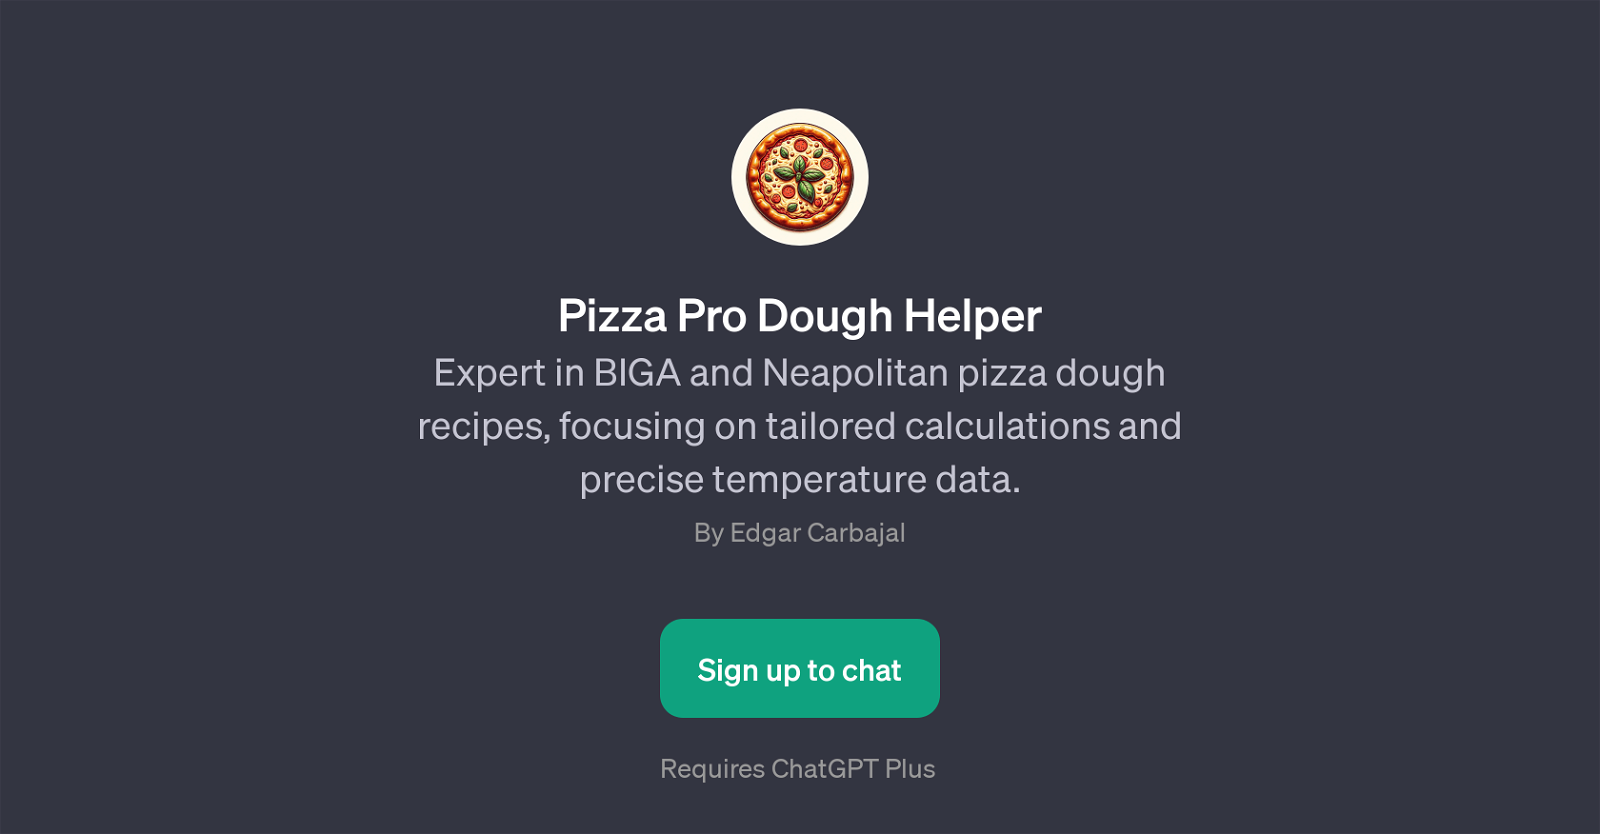 Pizza Pro Dough Helper website